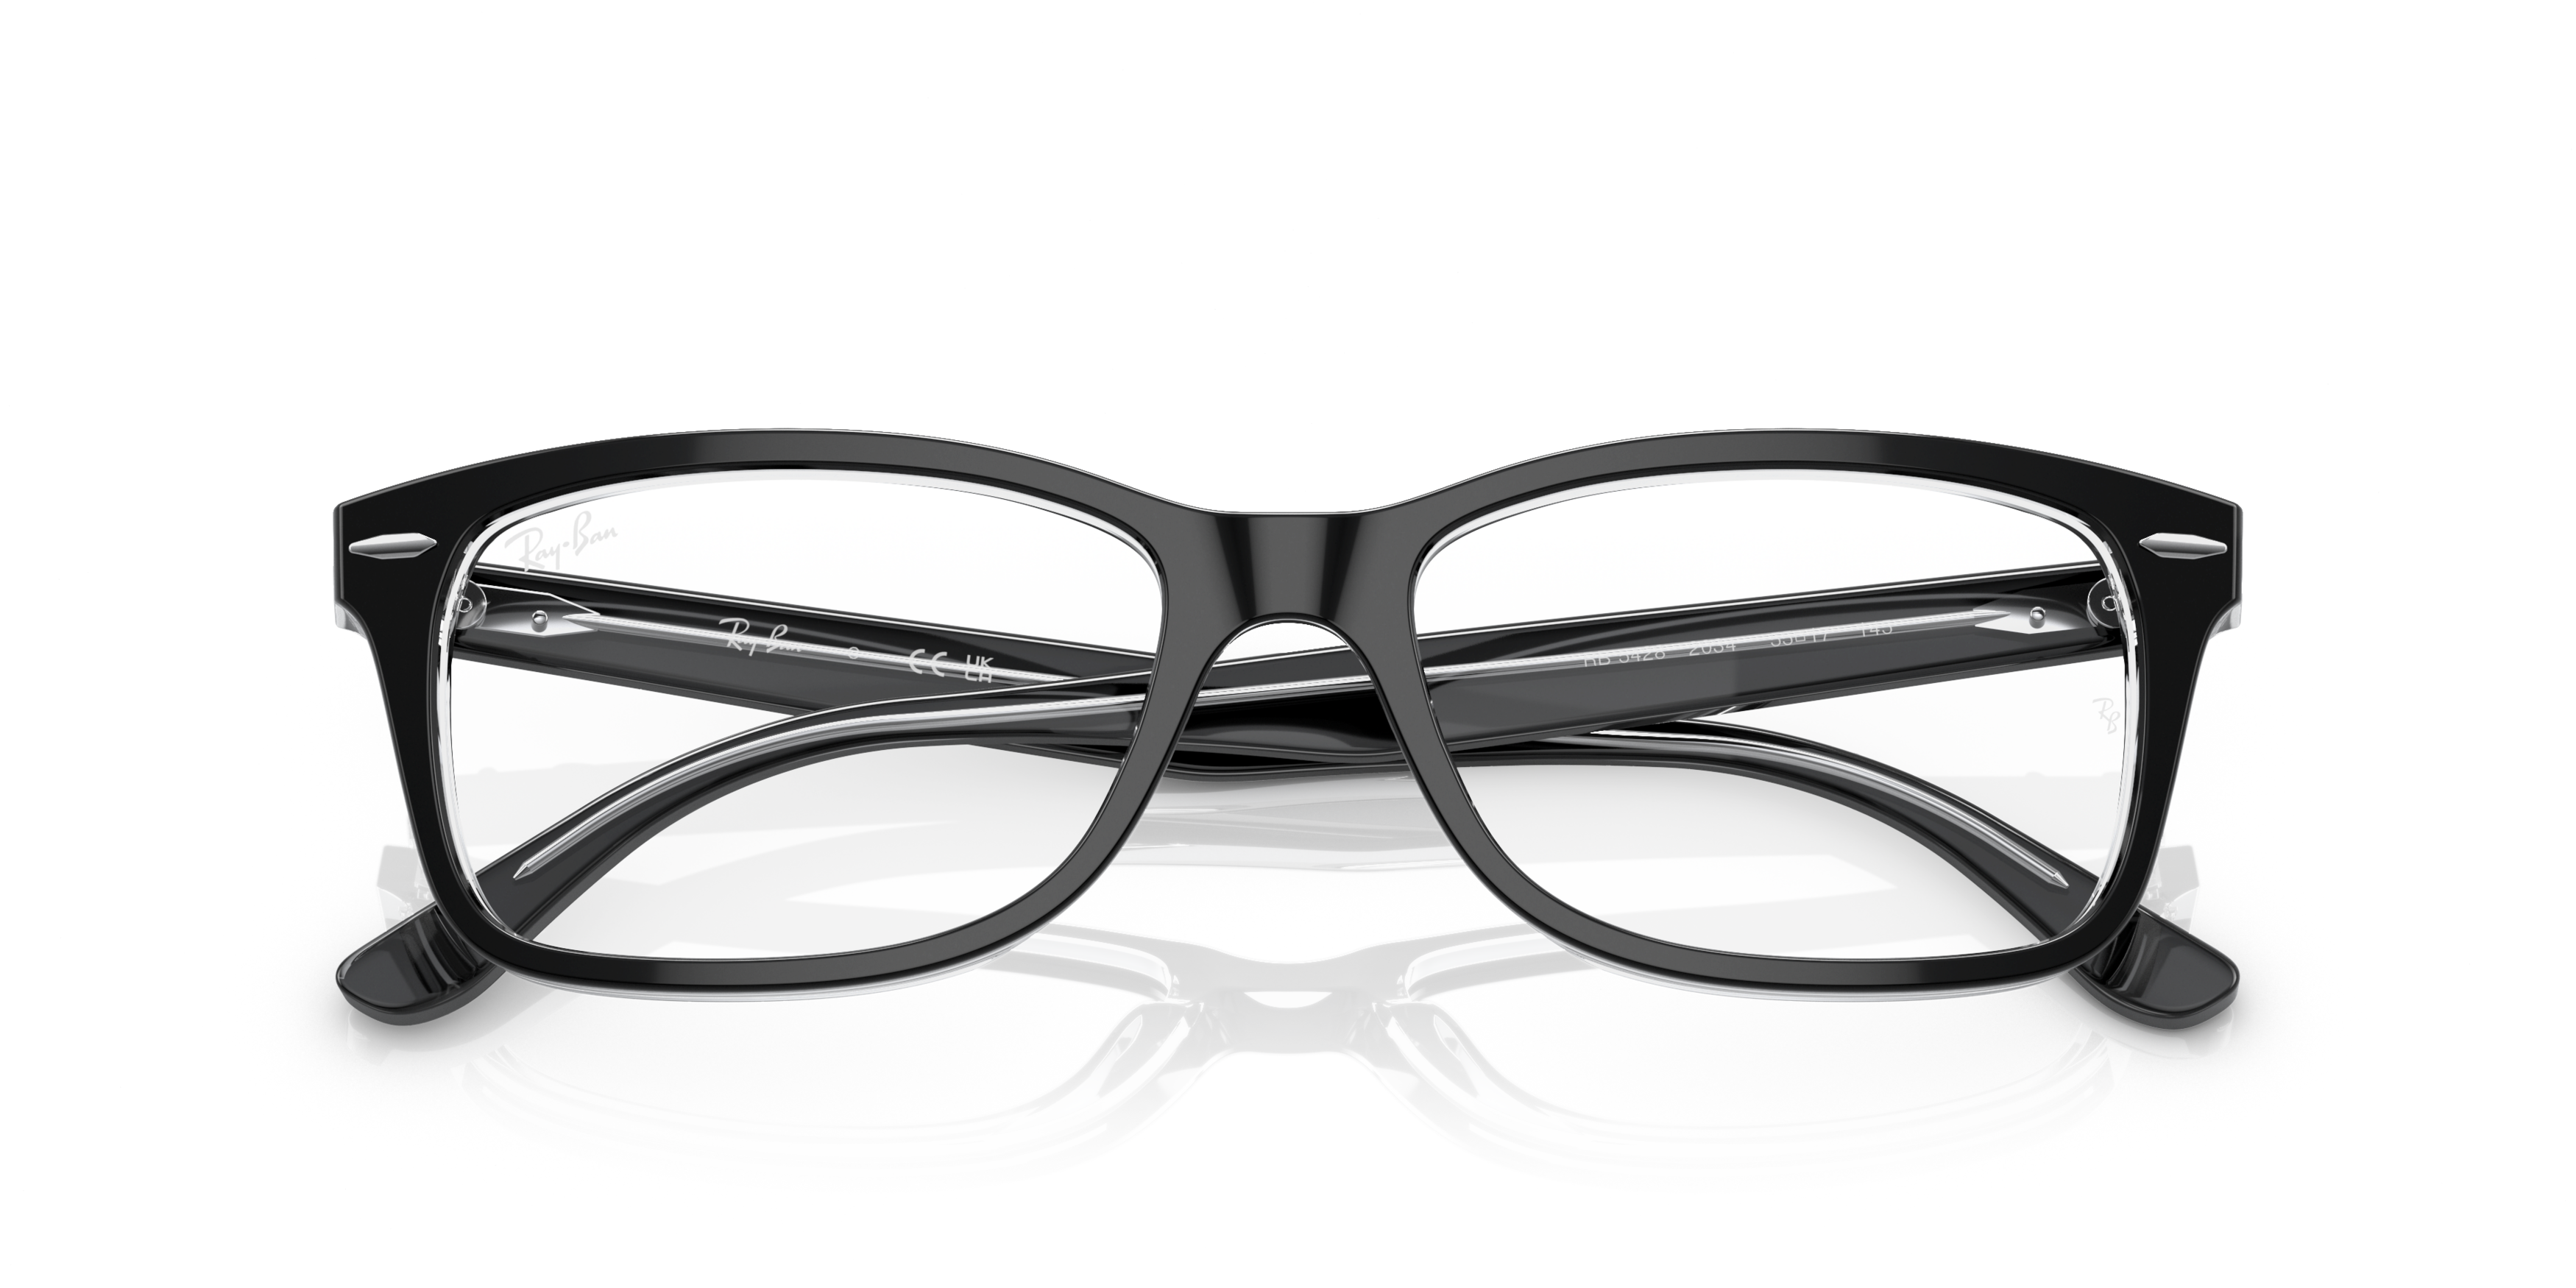 Folded Ray-Ban RX 5428 Glasses Transparent / Black